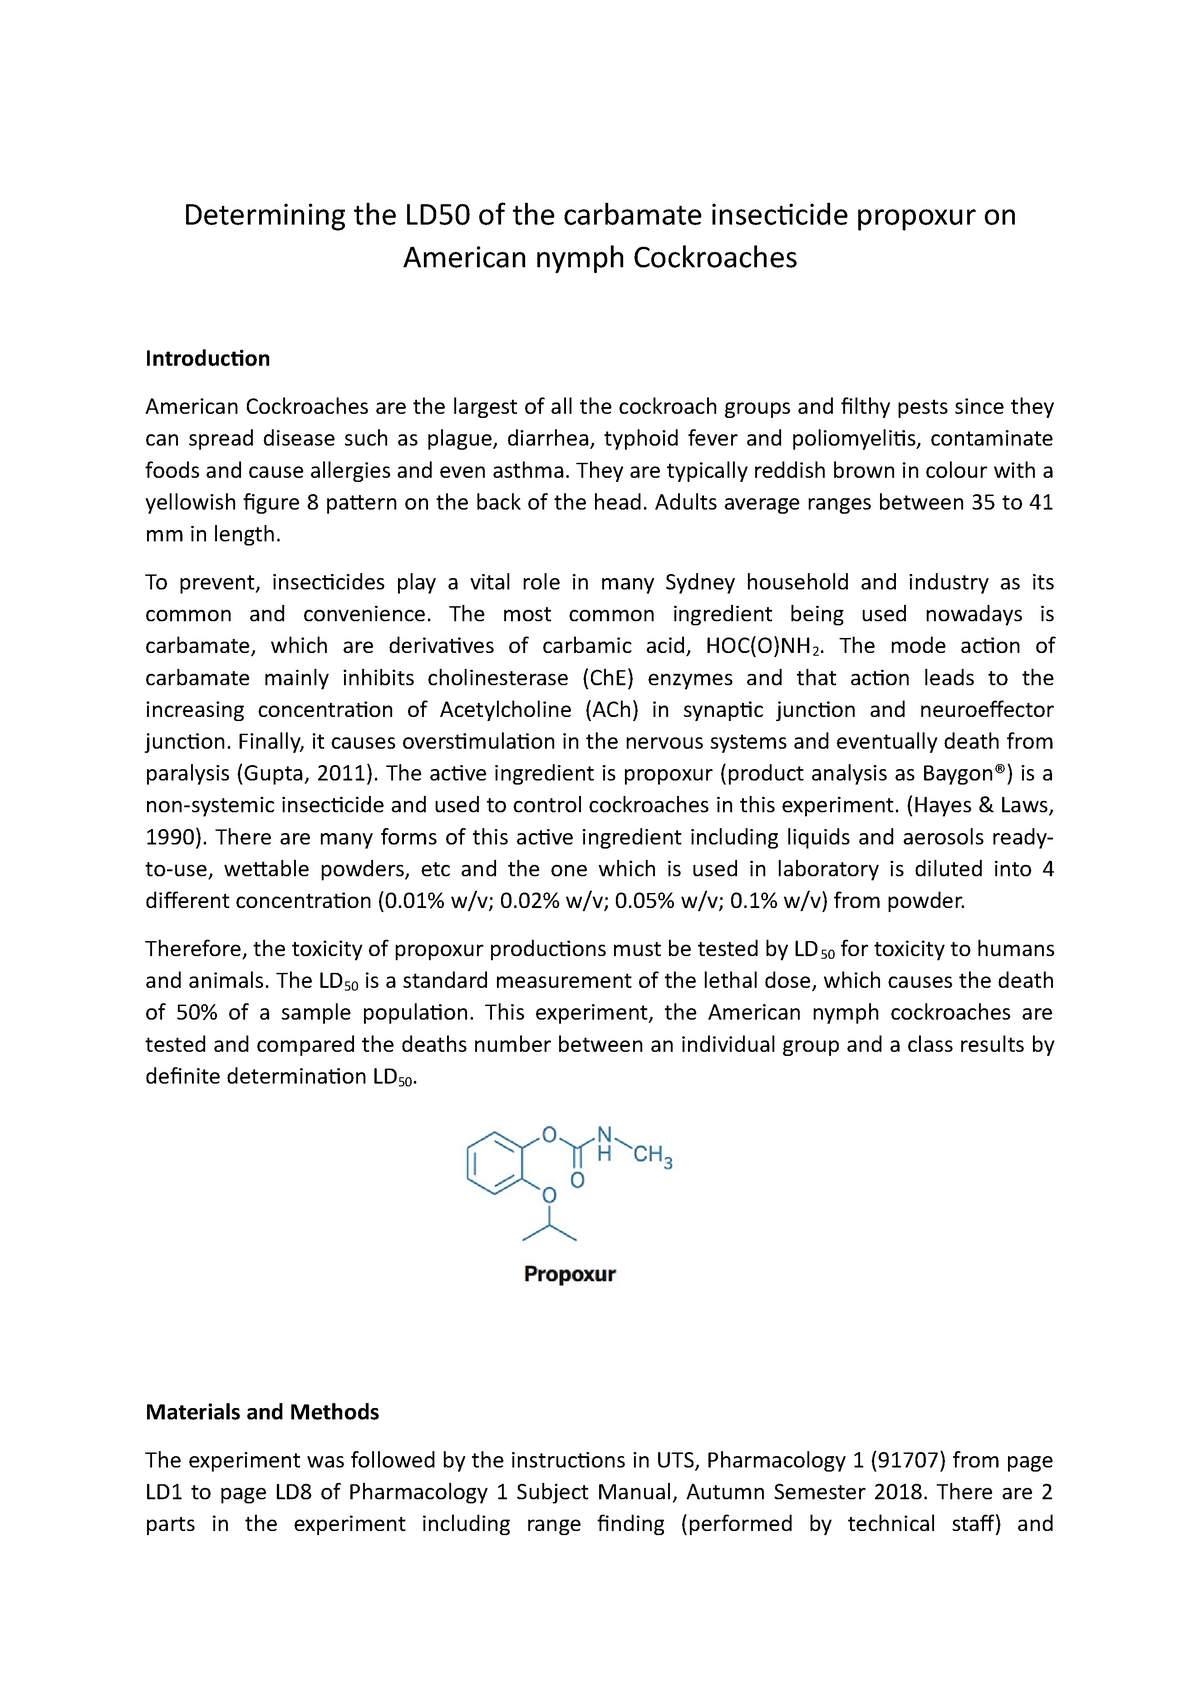 Pharmacology 1 Practice Report - StuDocu